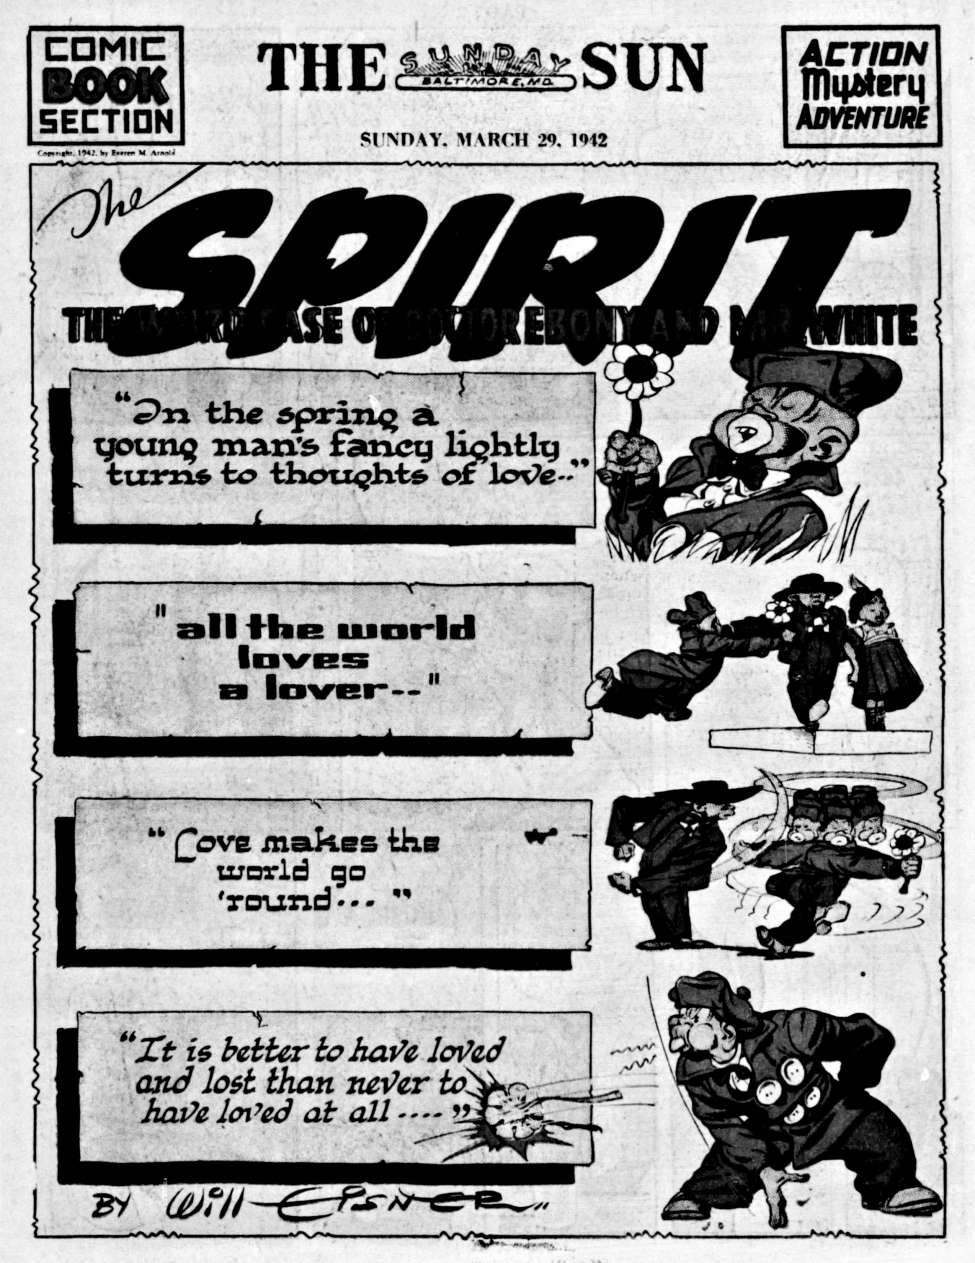 Book Cover For The Spirit (1942-03-29) - Baltimore Sun (b/w) - Version 1